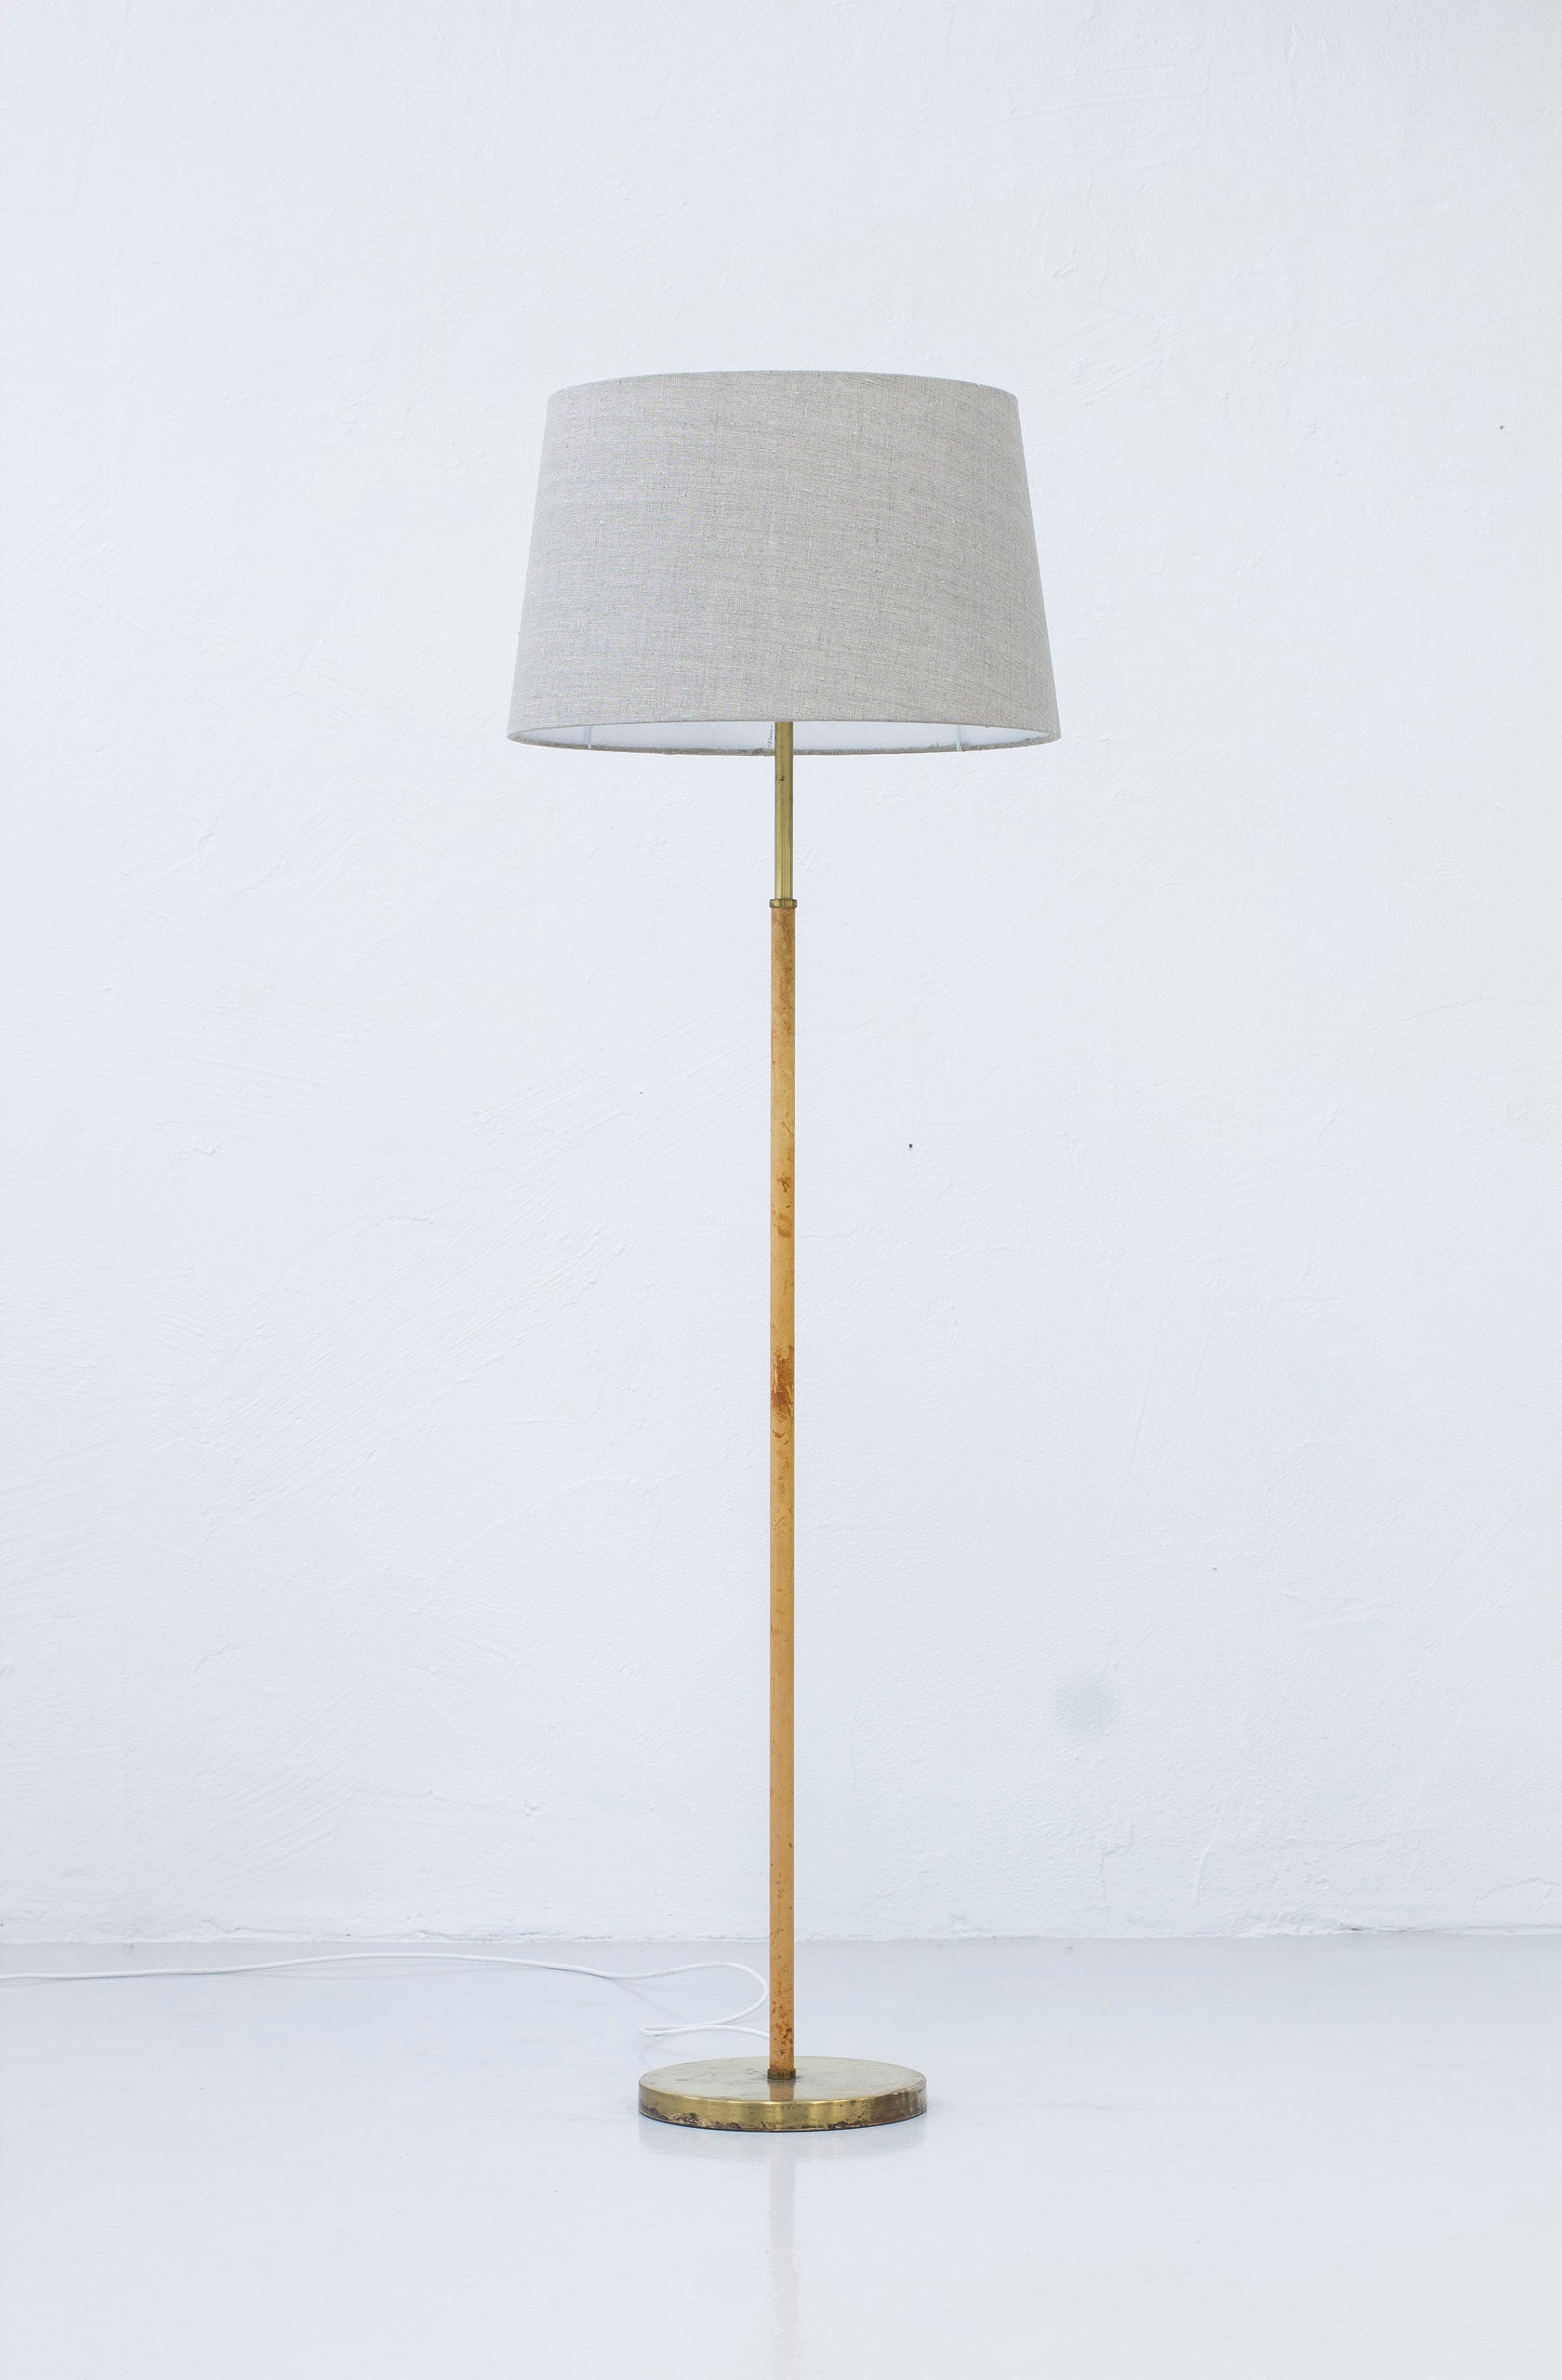 Floor lamp by Ateljé Lyktan